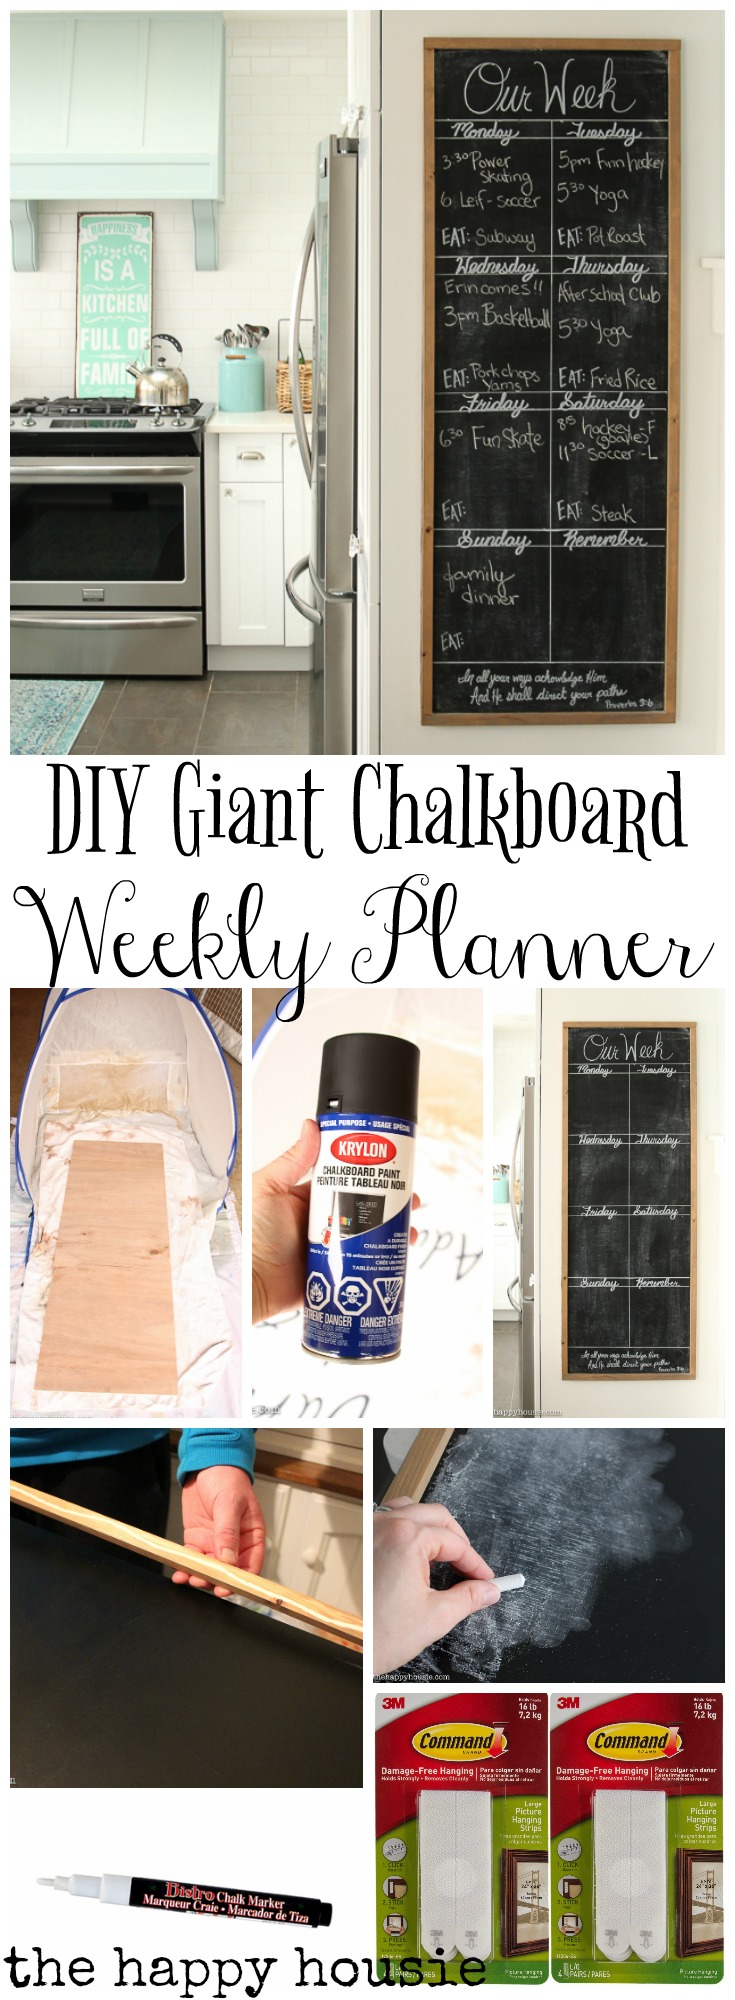 DIY Giant Chalkboard Weekly Planner poster.